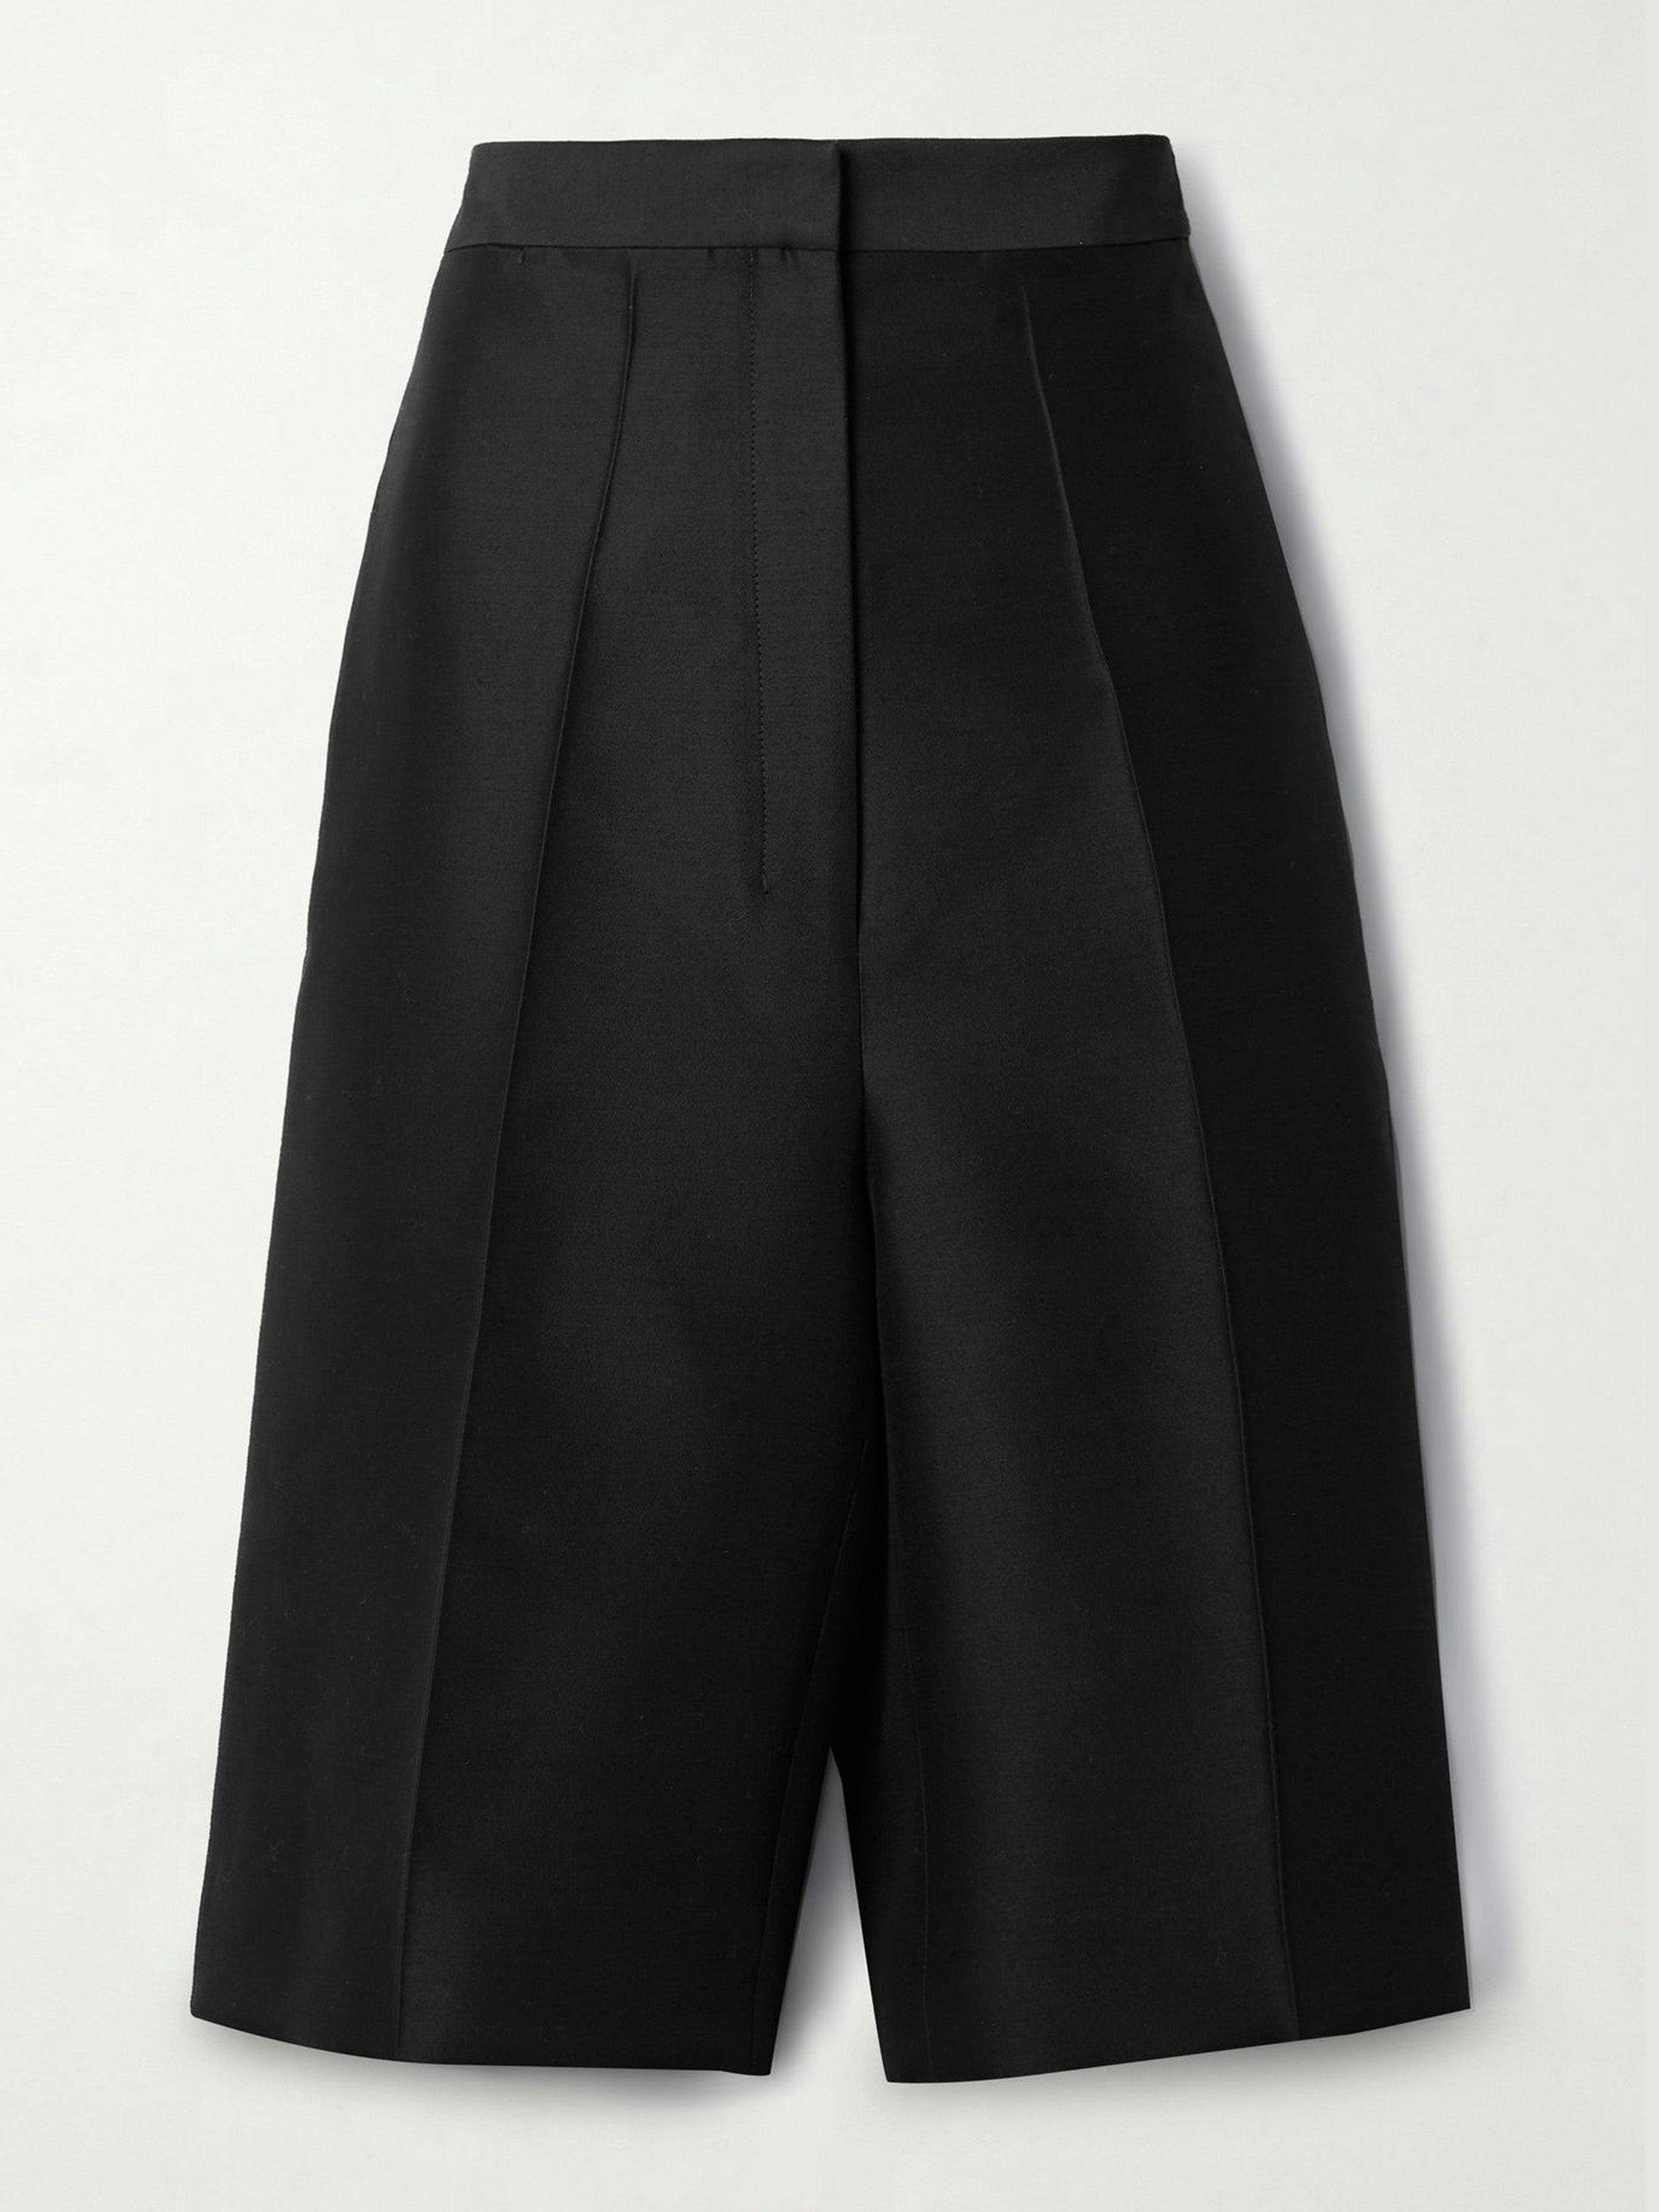 Black wool and silk-blend shorts